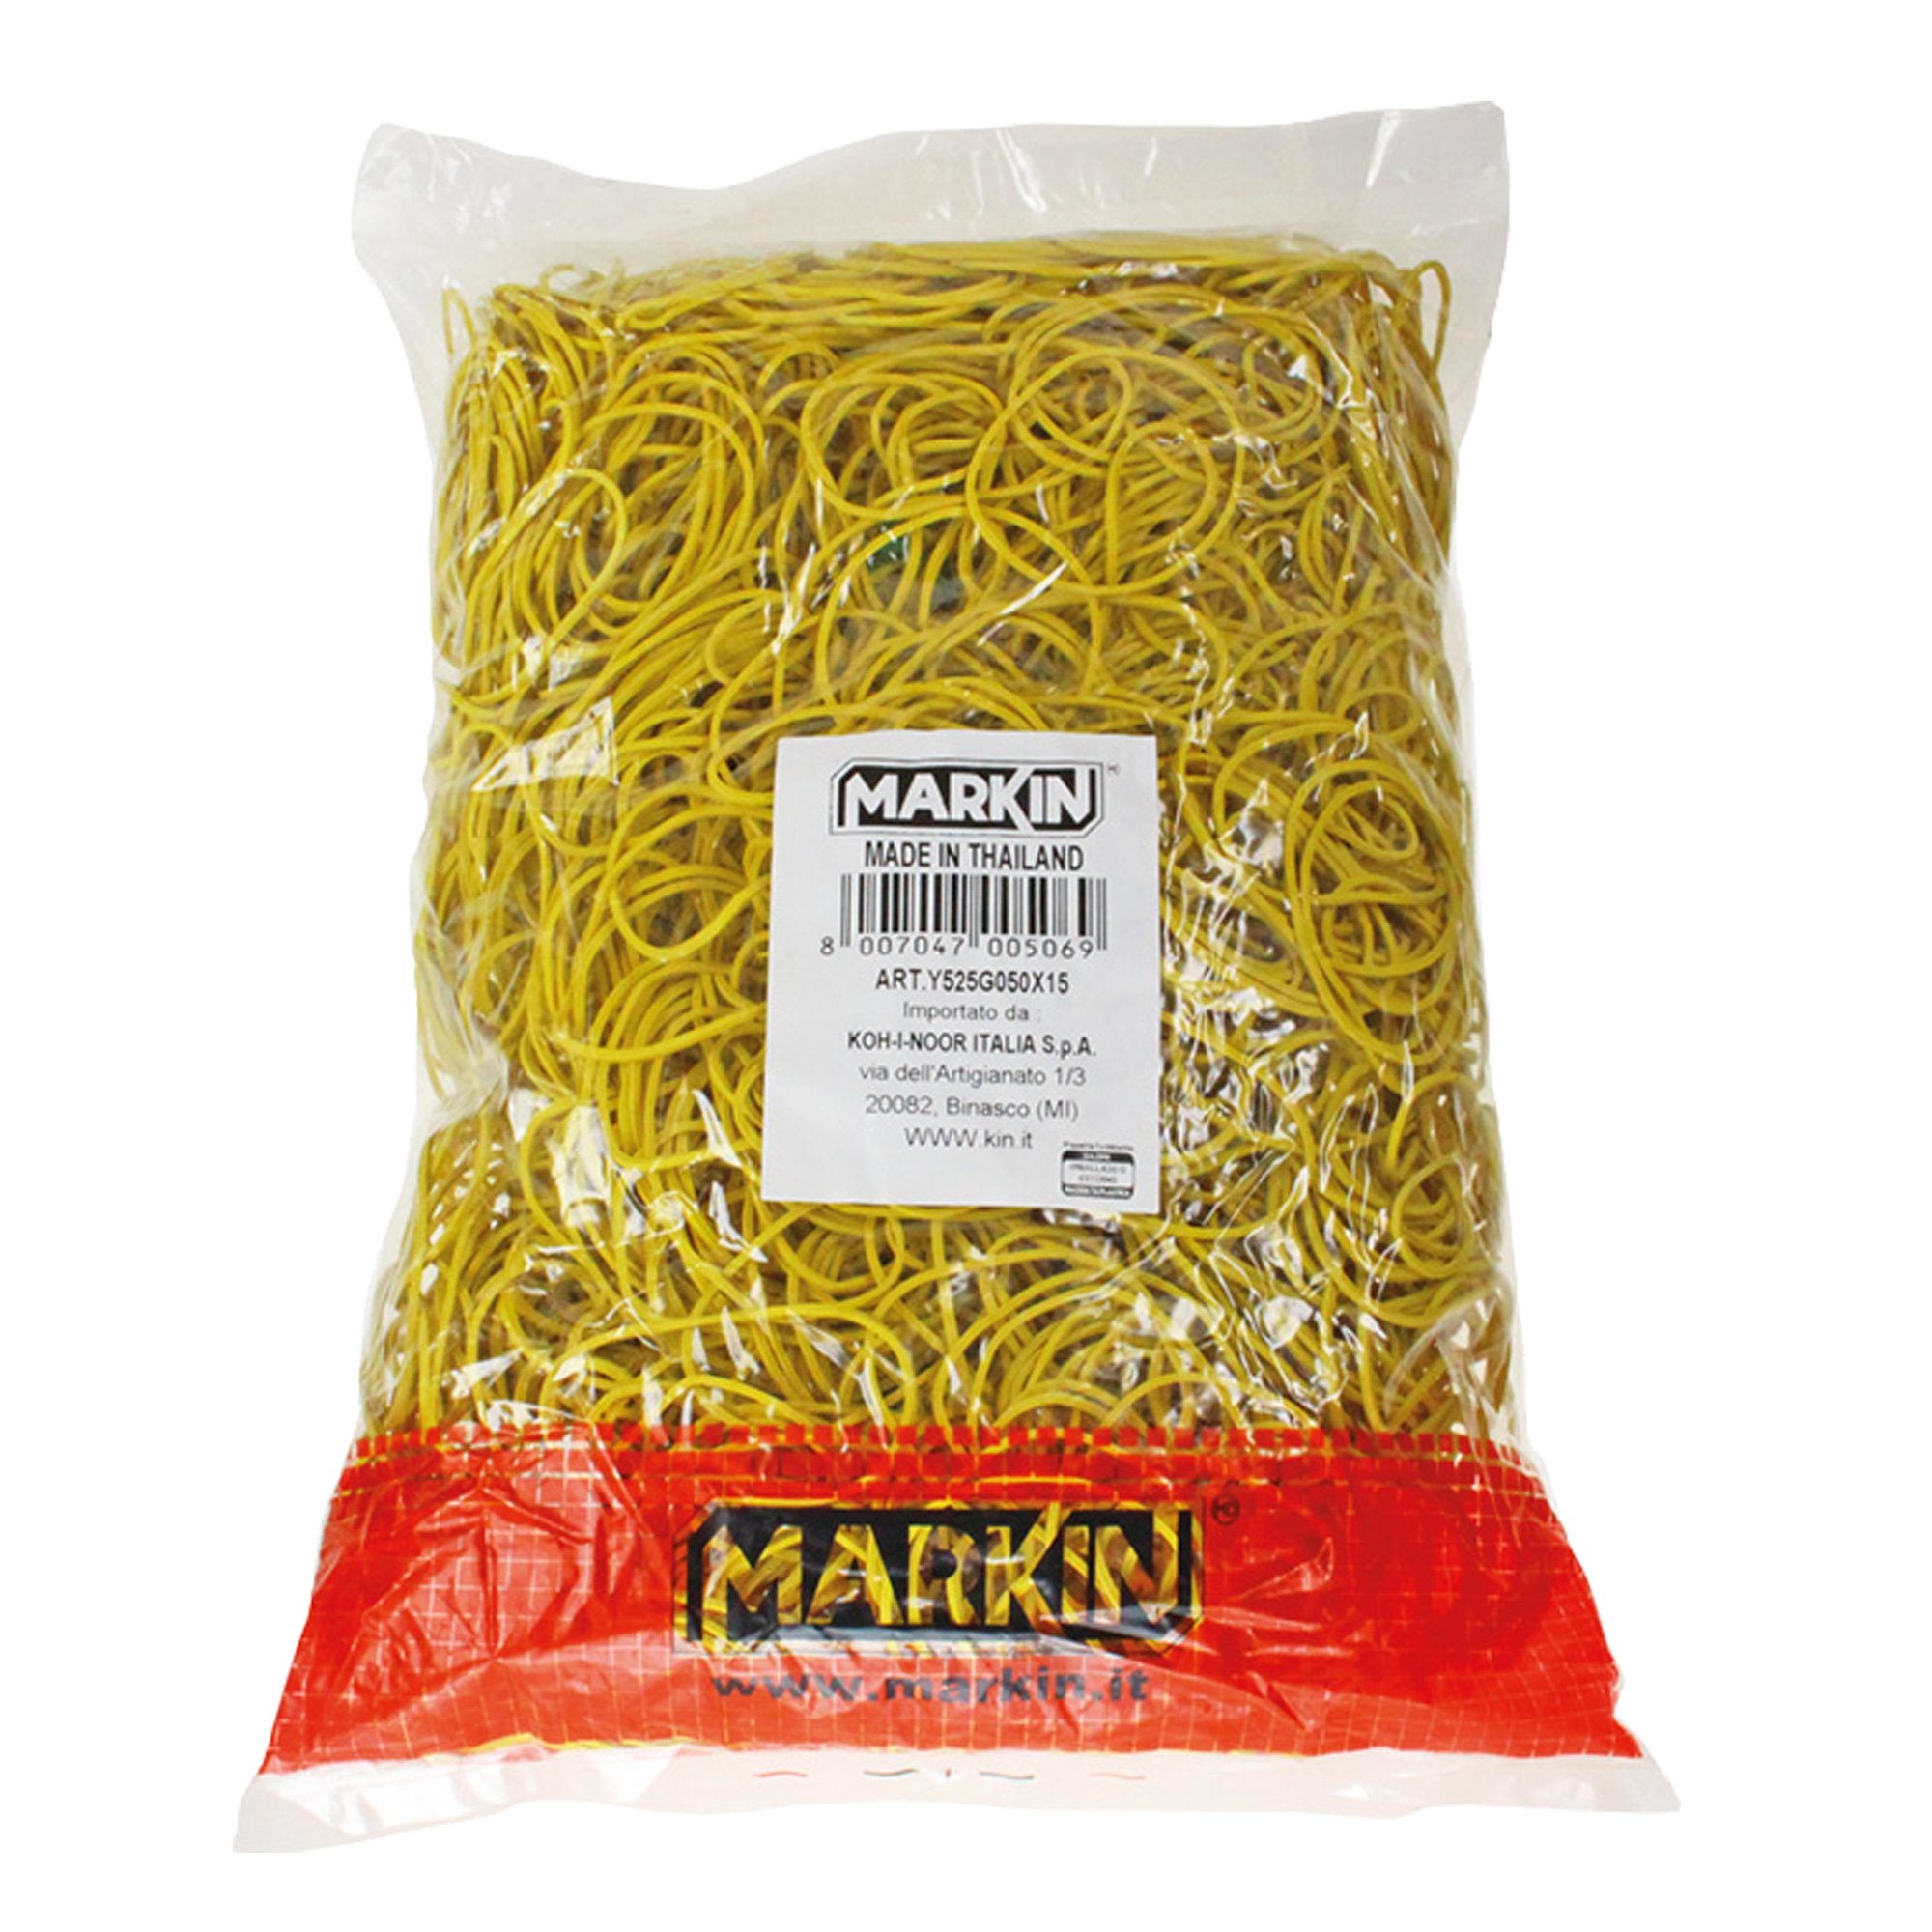 markin-elastico-gomma-giallo-d20-sacco-1kg